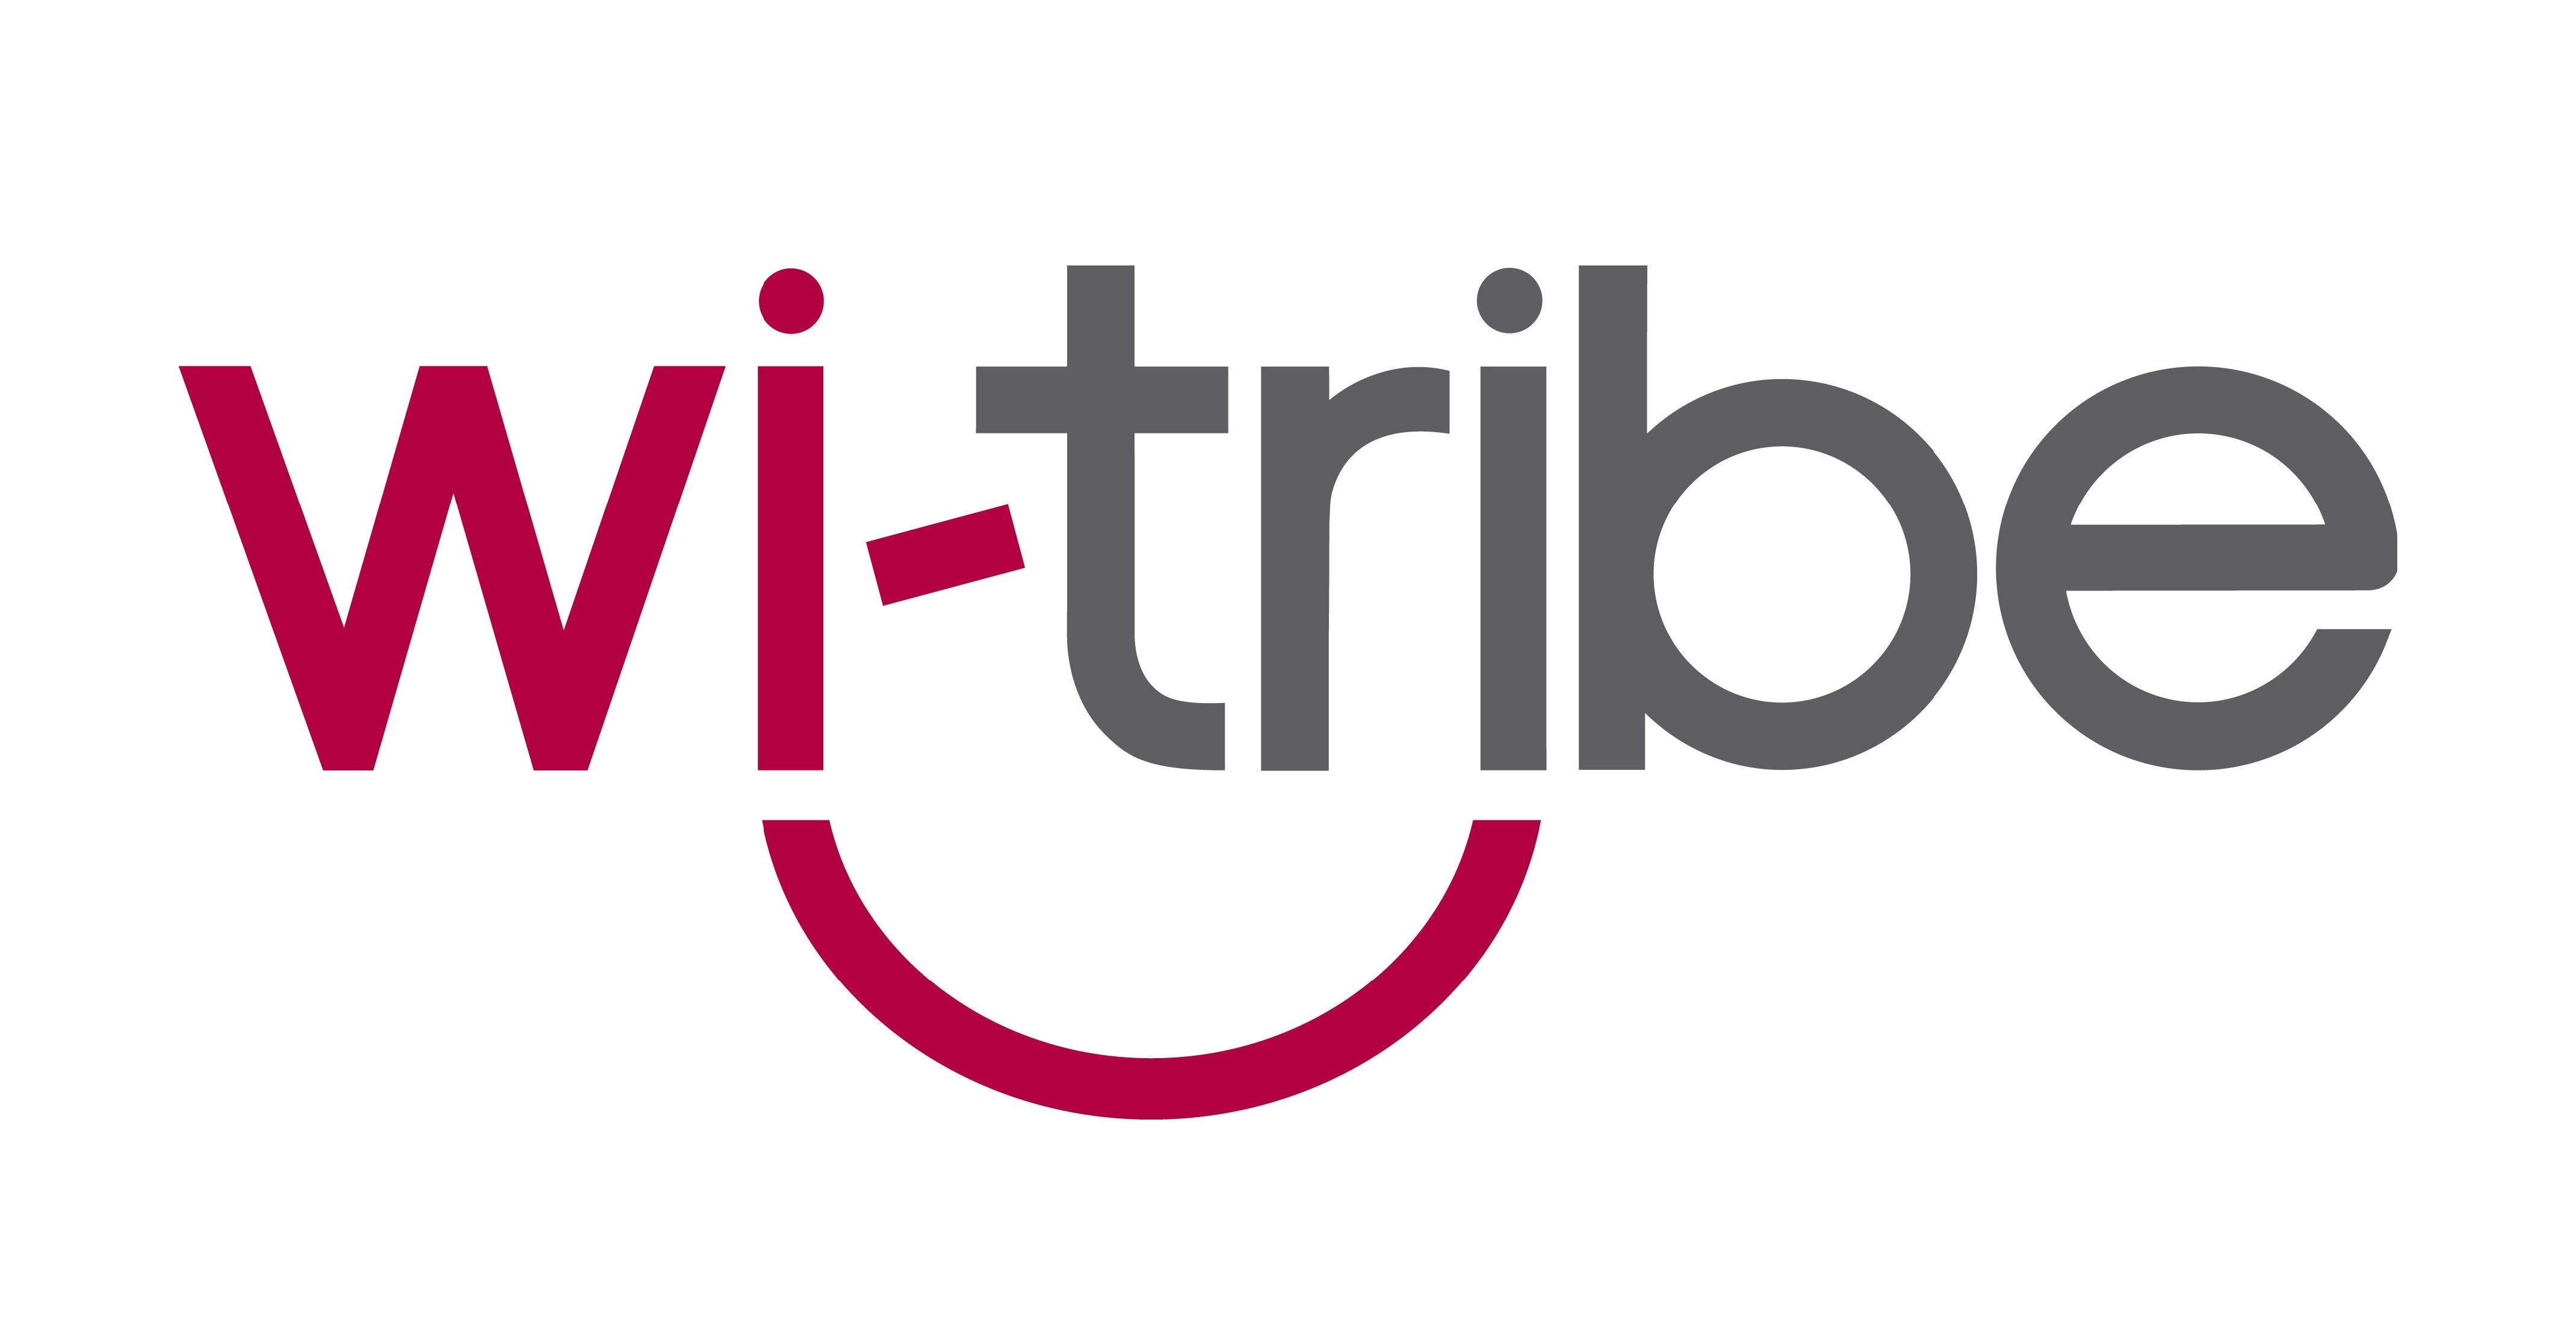 Wi-tribe